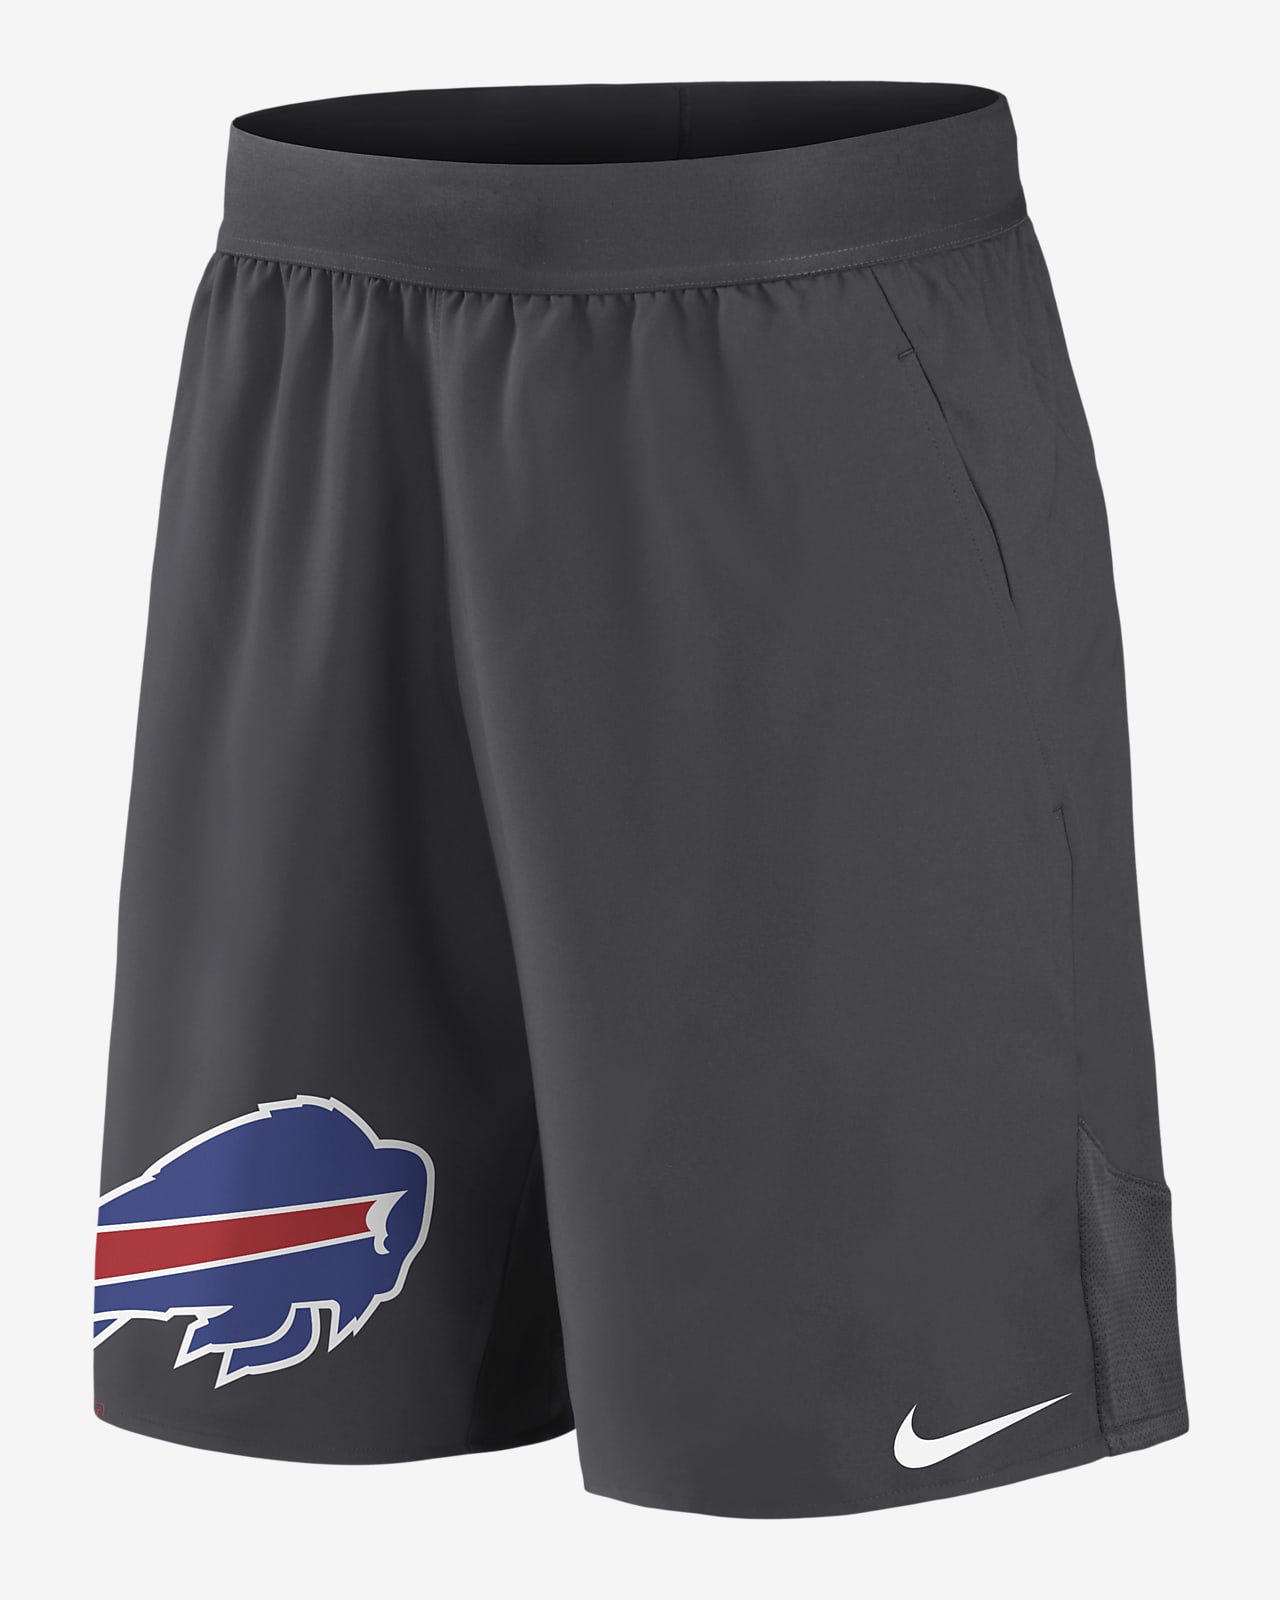 Nike Dri-FIT Stretch (NFL Buffalo Bills) Men's Shorts